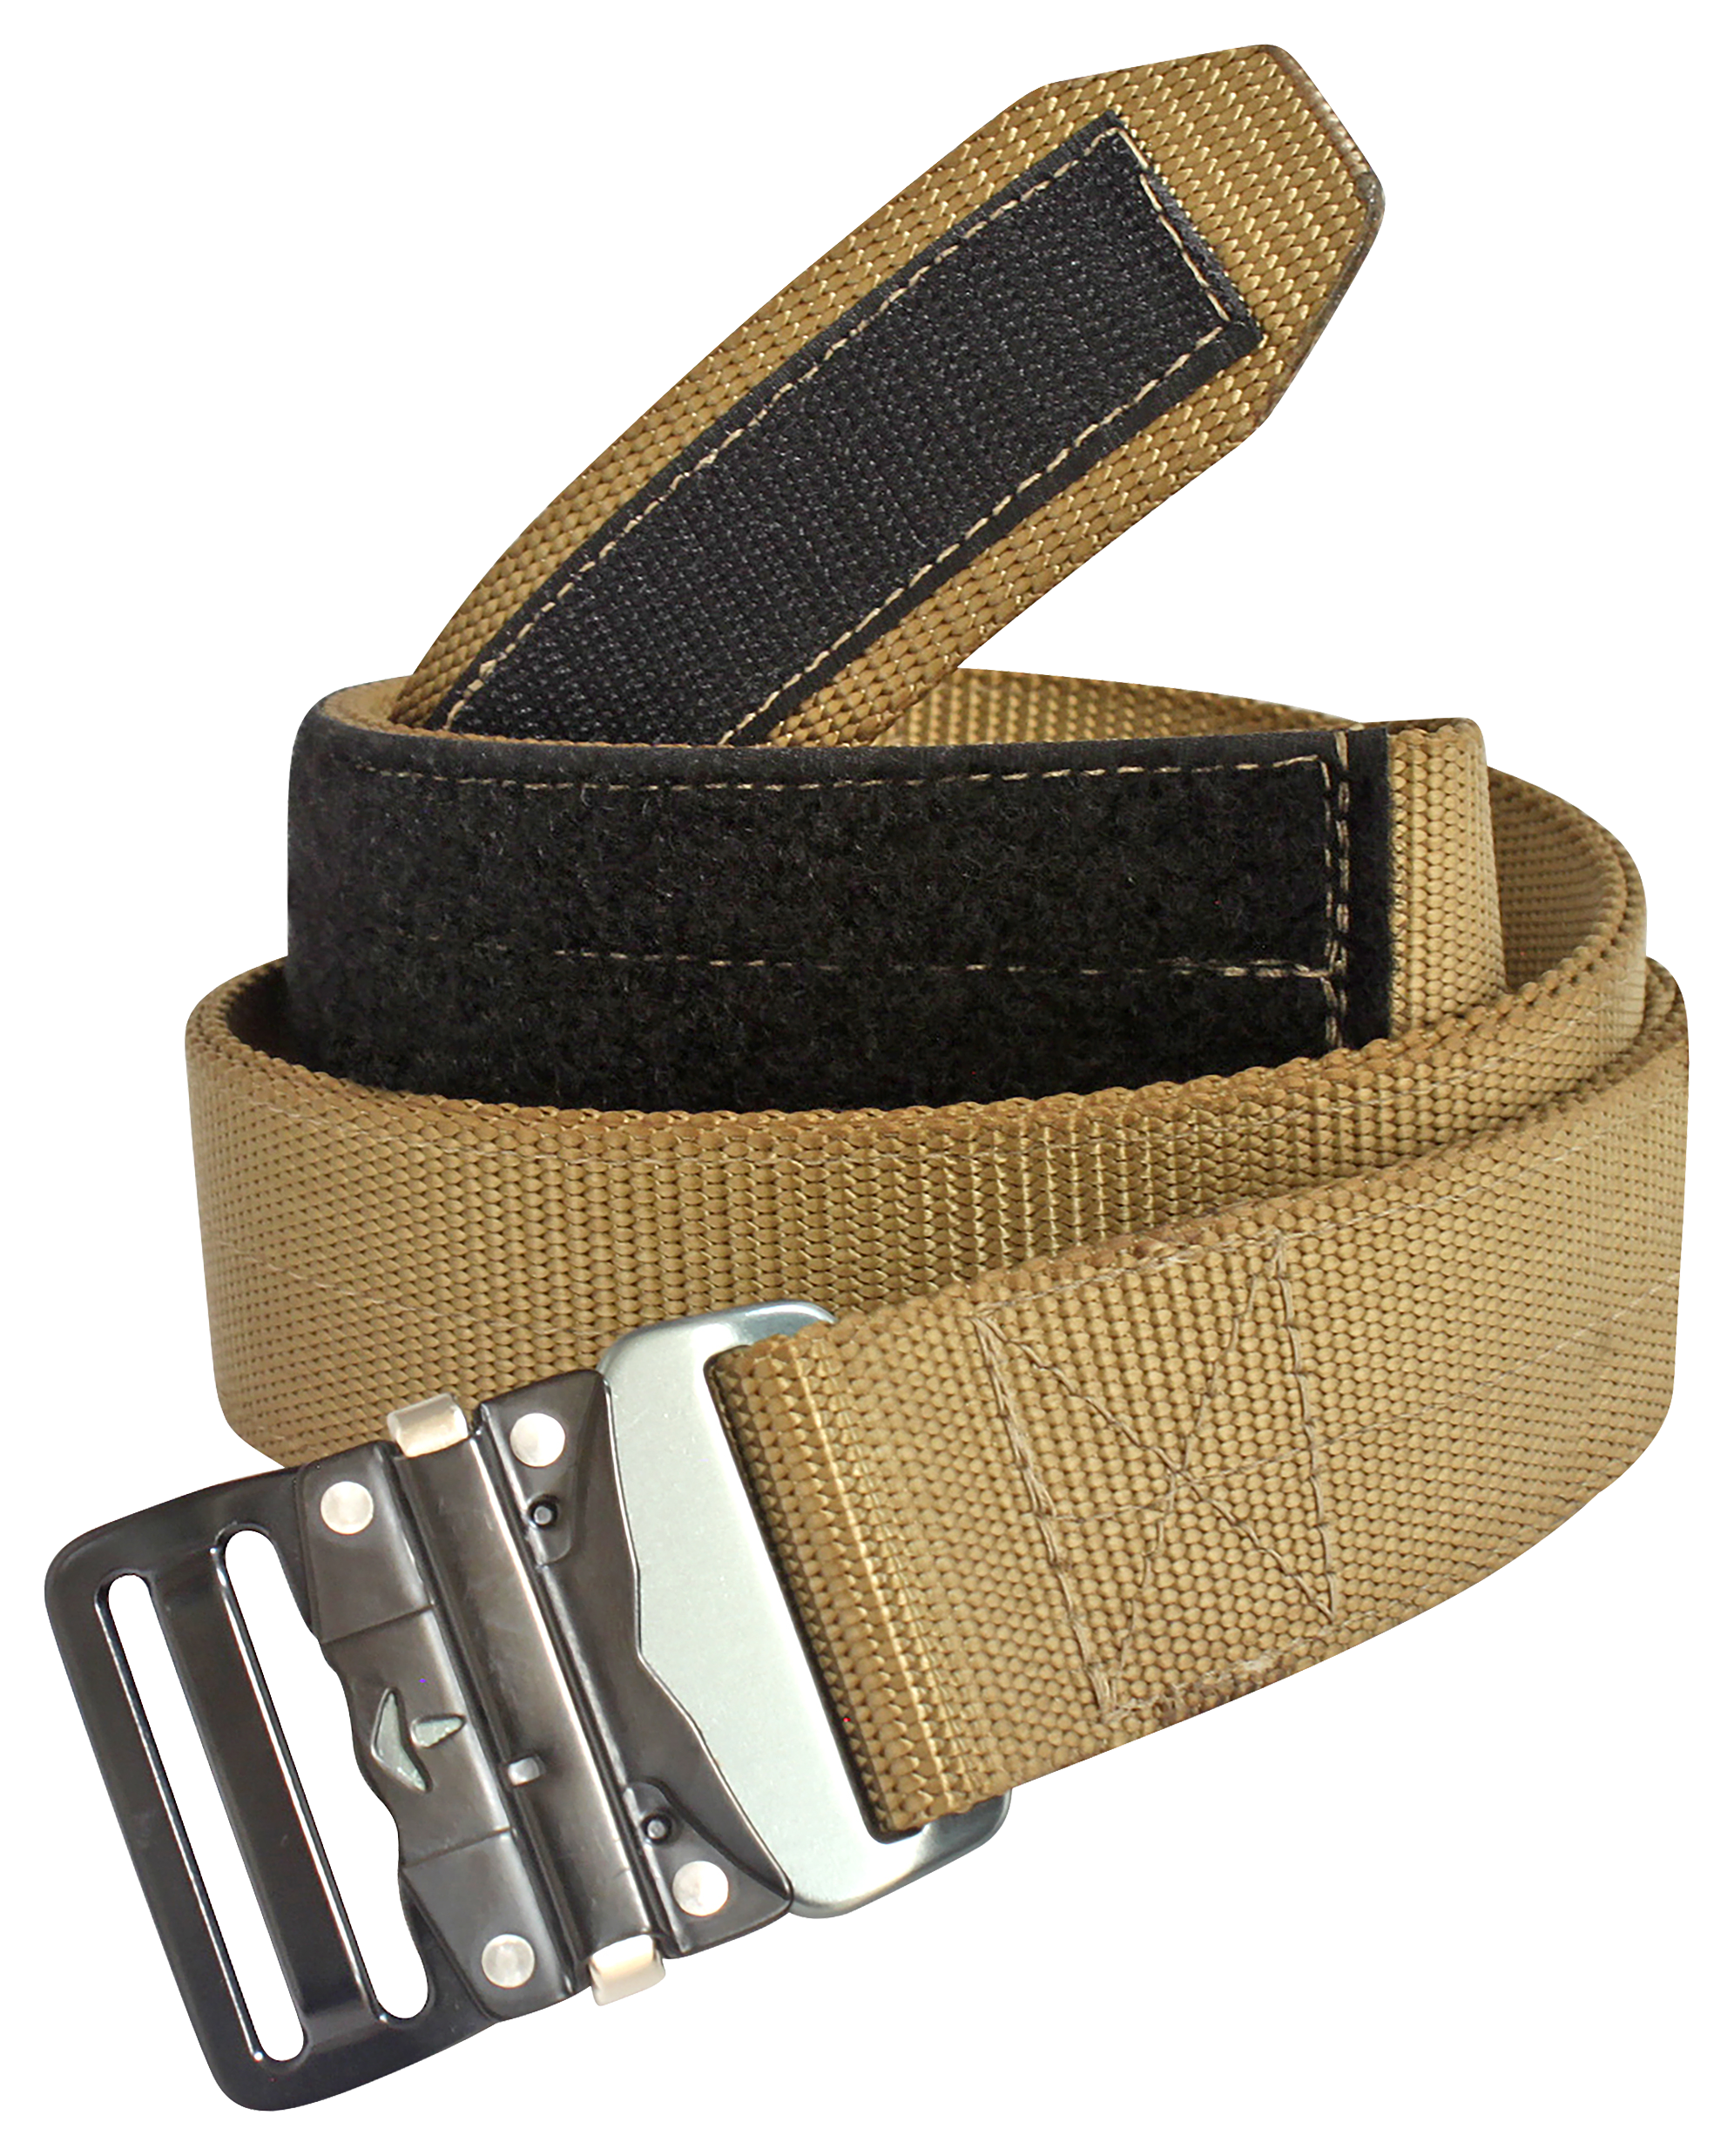 Bison Designs LoPro Heavy-Duty Buckle Belt for Men - Coyote Brown - S